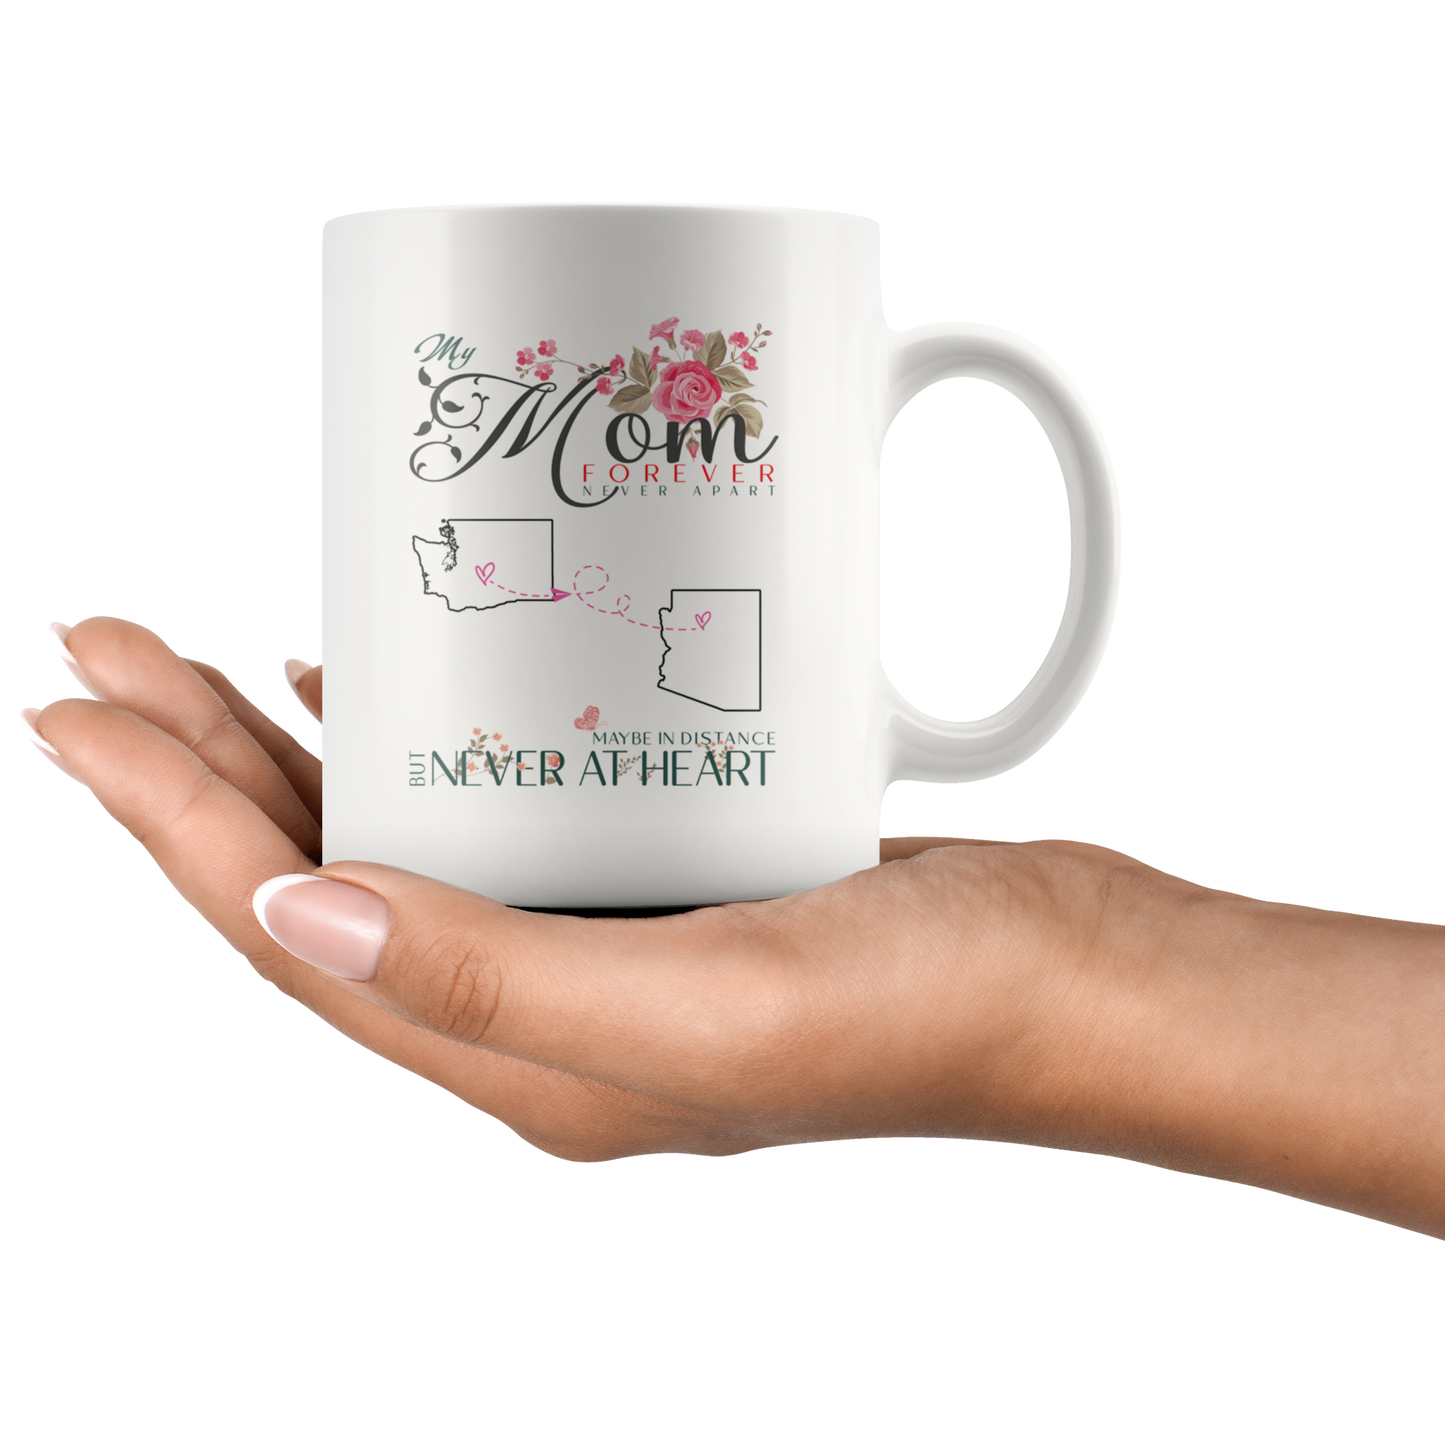 M-20321571-sp-24037 - [ Washington | Arizona ]Personalized Mothers Day Coffee Mug - My Mom Forever Never A